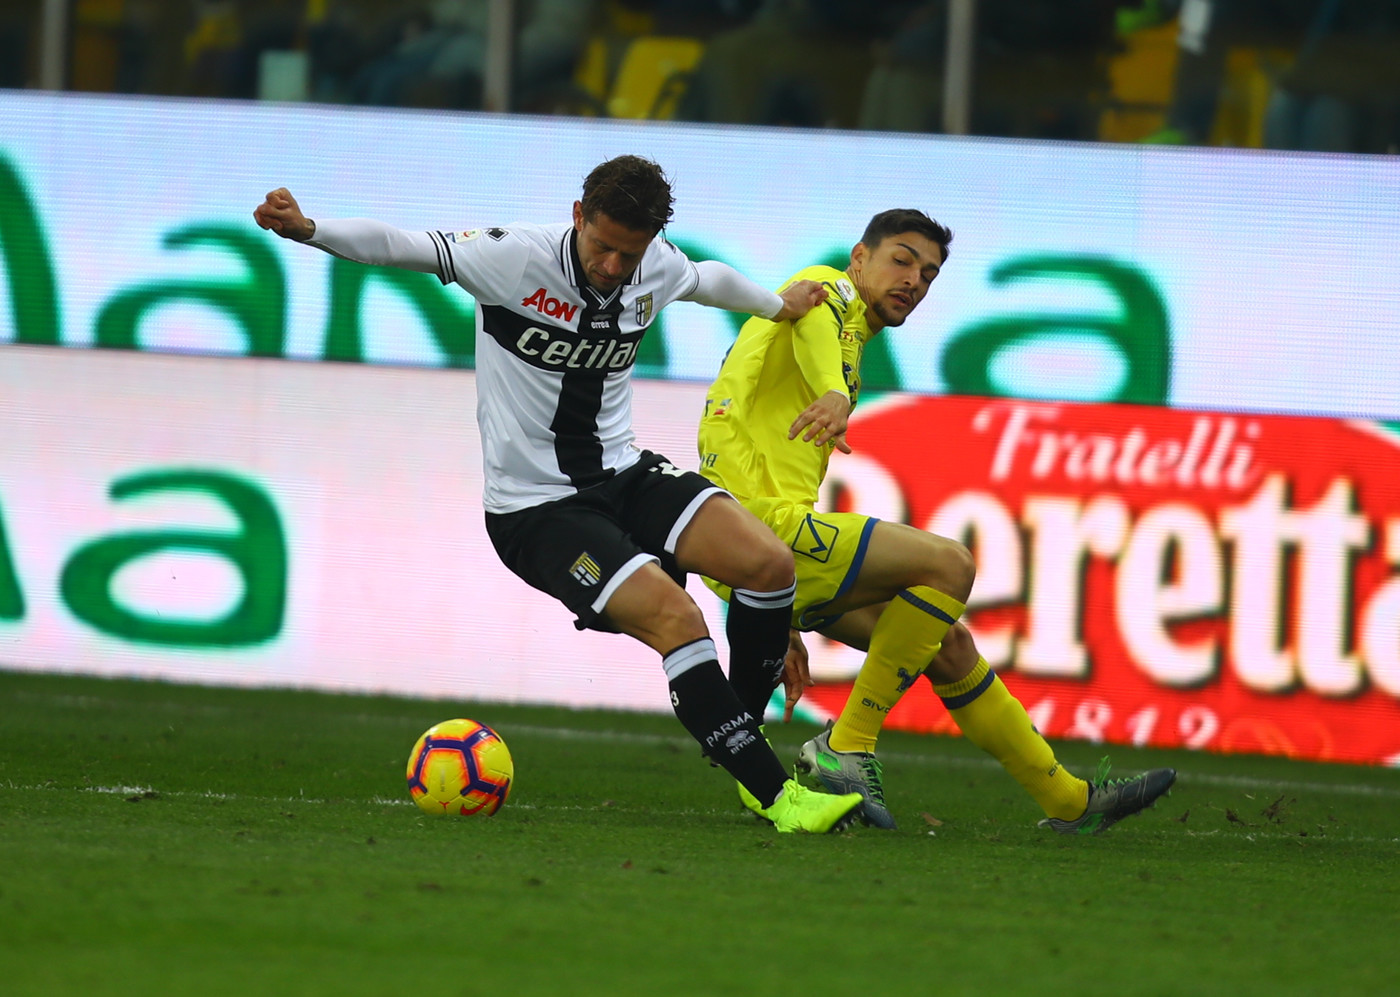 Serie A, Parma-Chievo 1-1 | Il Fotoracconto